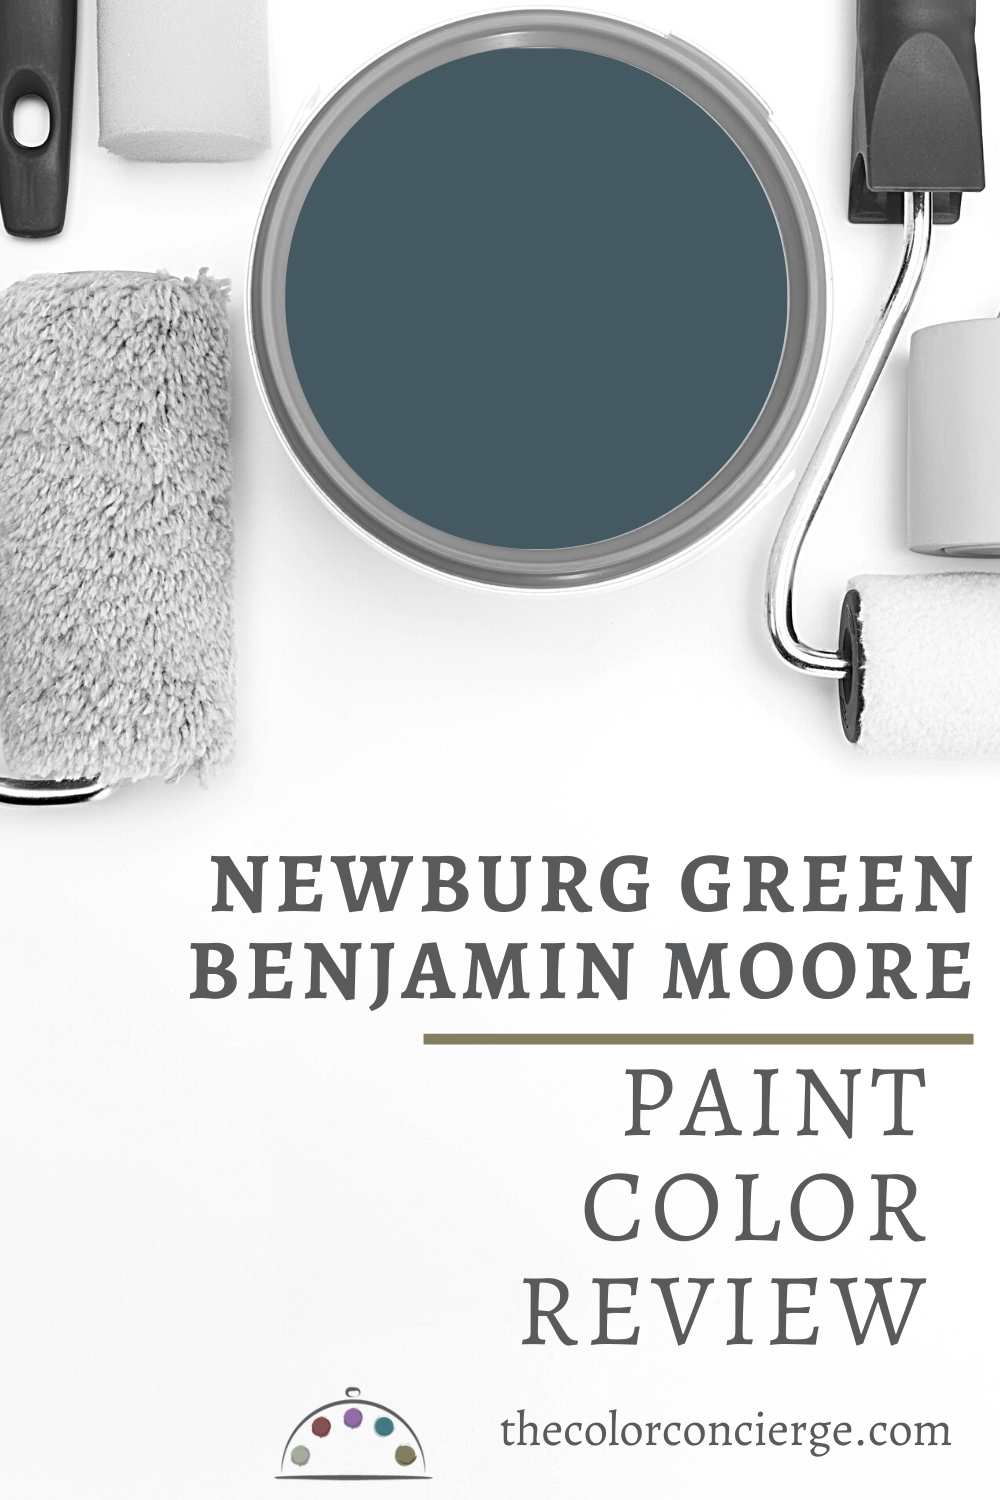 Newburg Green color Review